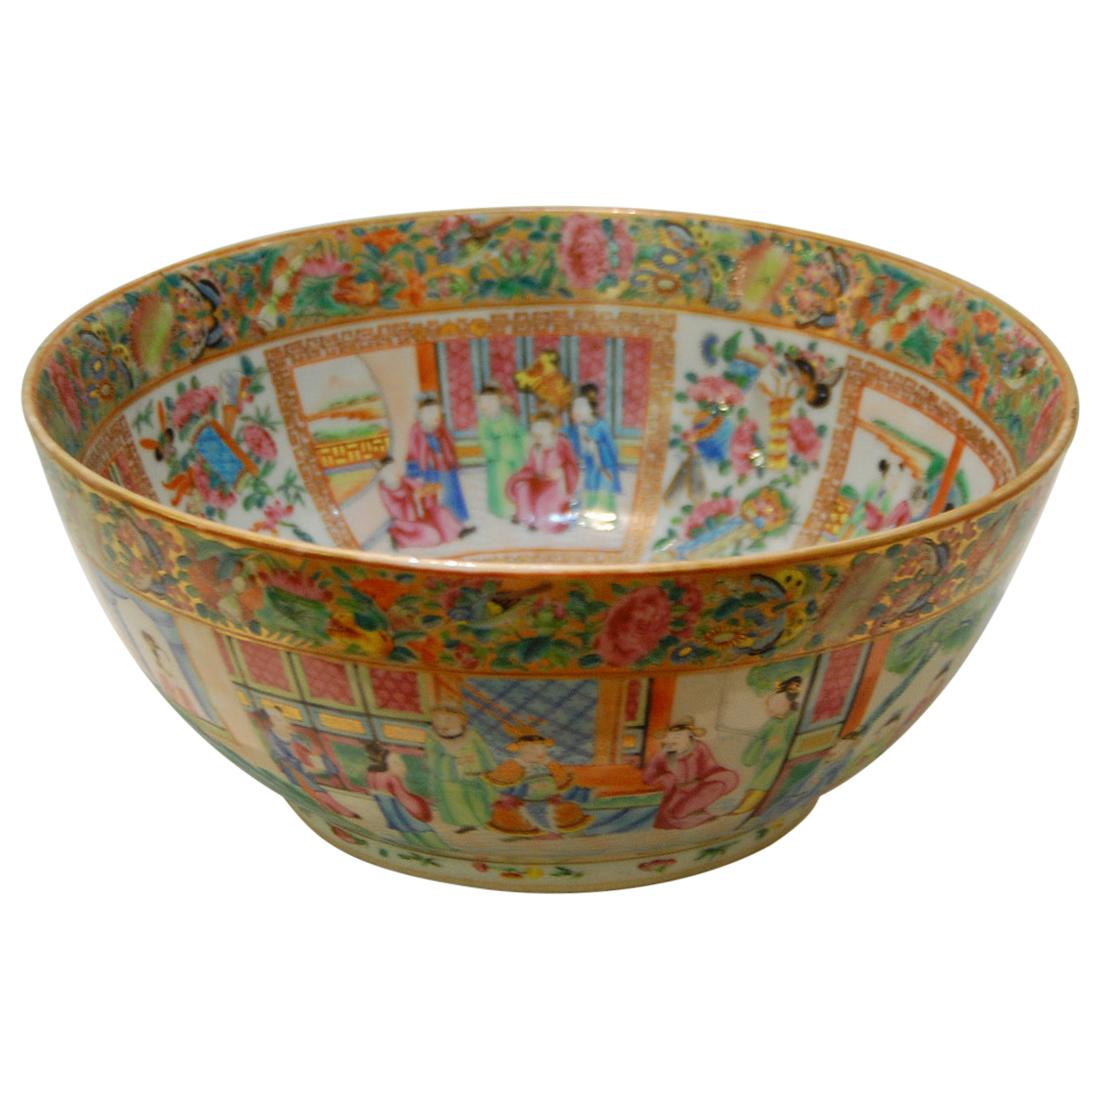 Chinese Export Rose Mandarin Punch Bowl, circa 1840